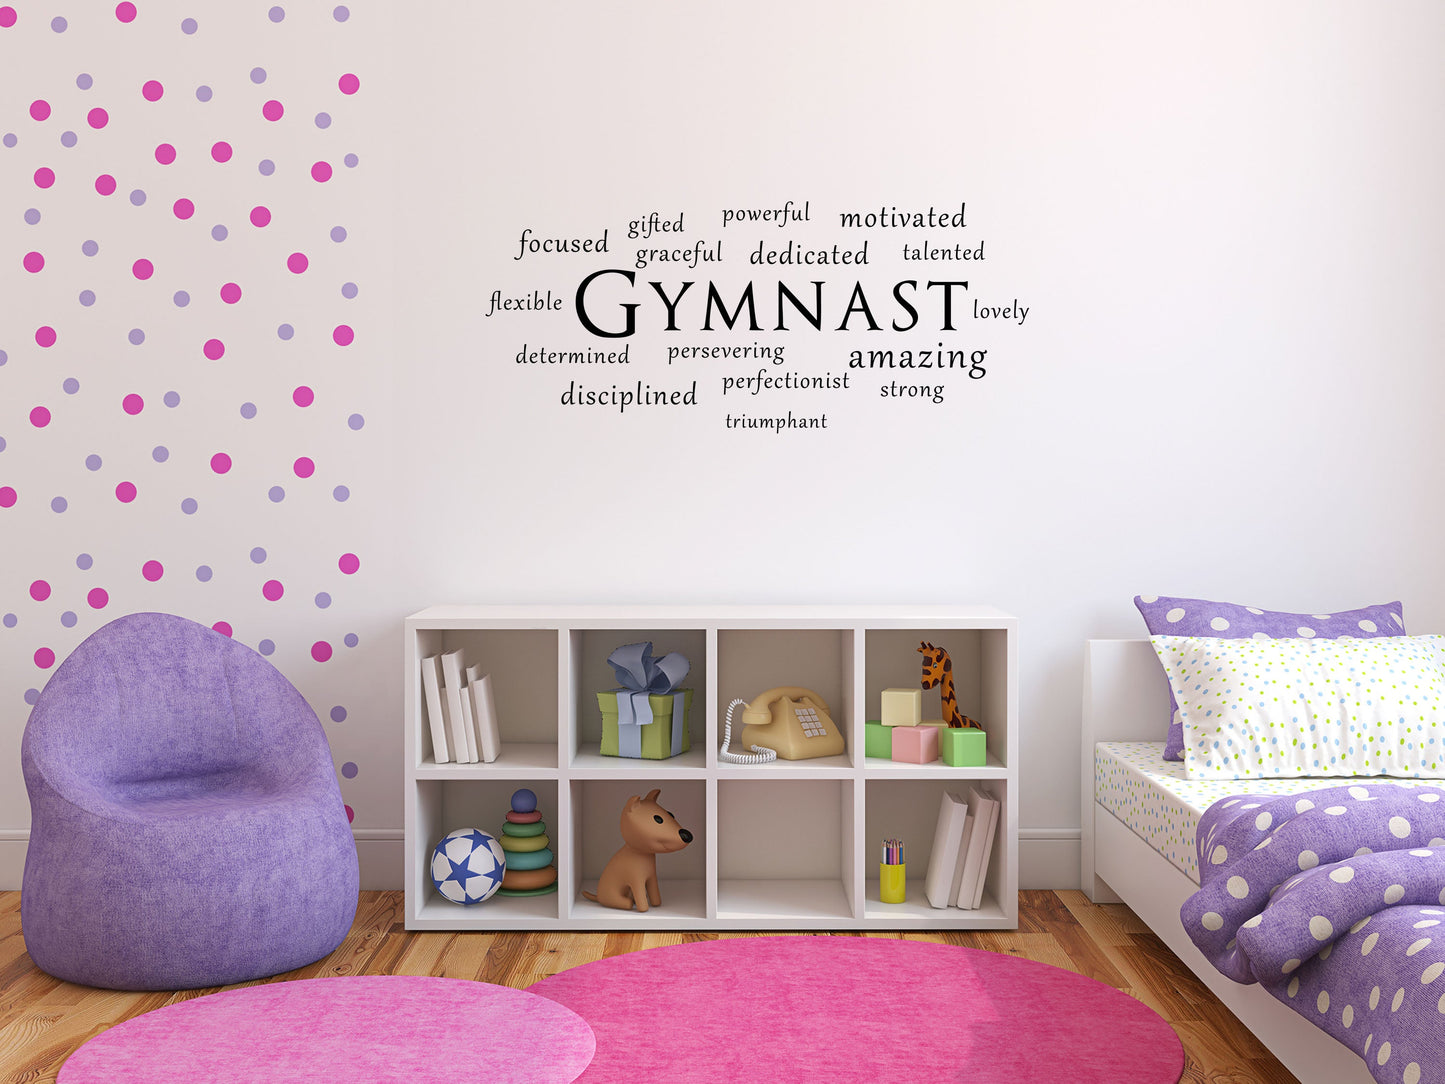 Gymnast Wall Sticker - Gymnastics Wall Decal Wall Art - Gymnastics Quote, Bedroom Decals Vinyl Wall Decal Inspirational Wall Signs 